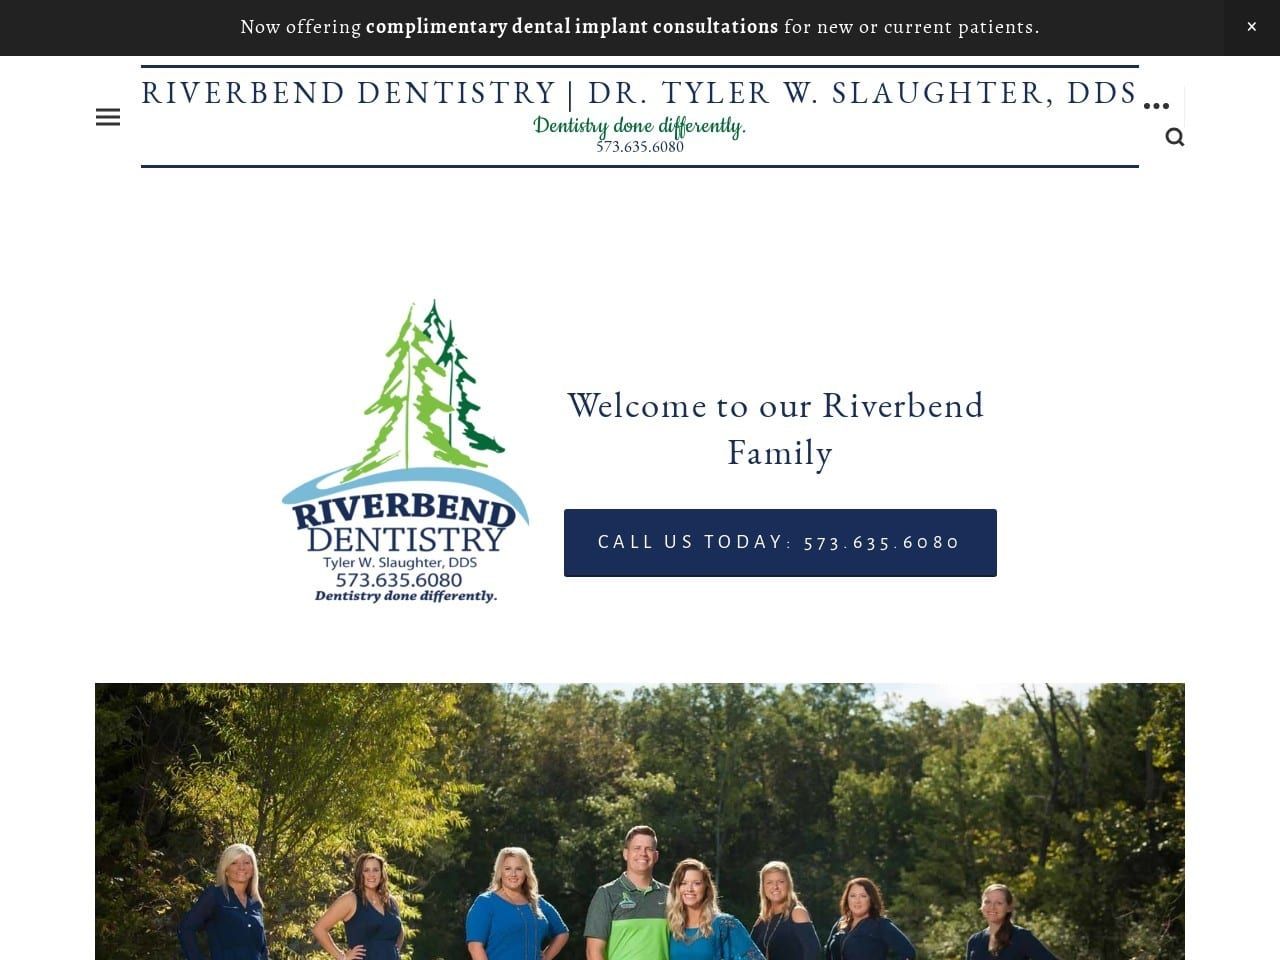 Riverbend Dentistry Website Screenshot from riverbenddentistry.com